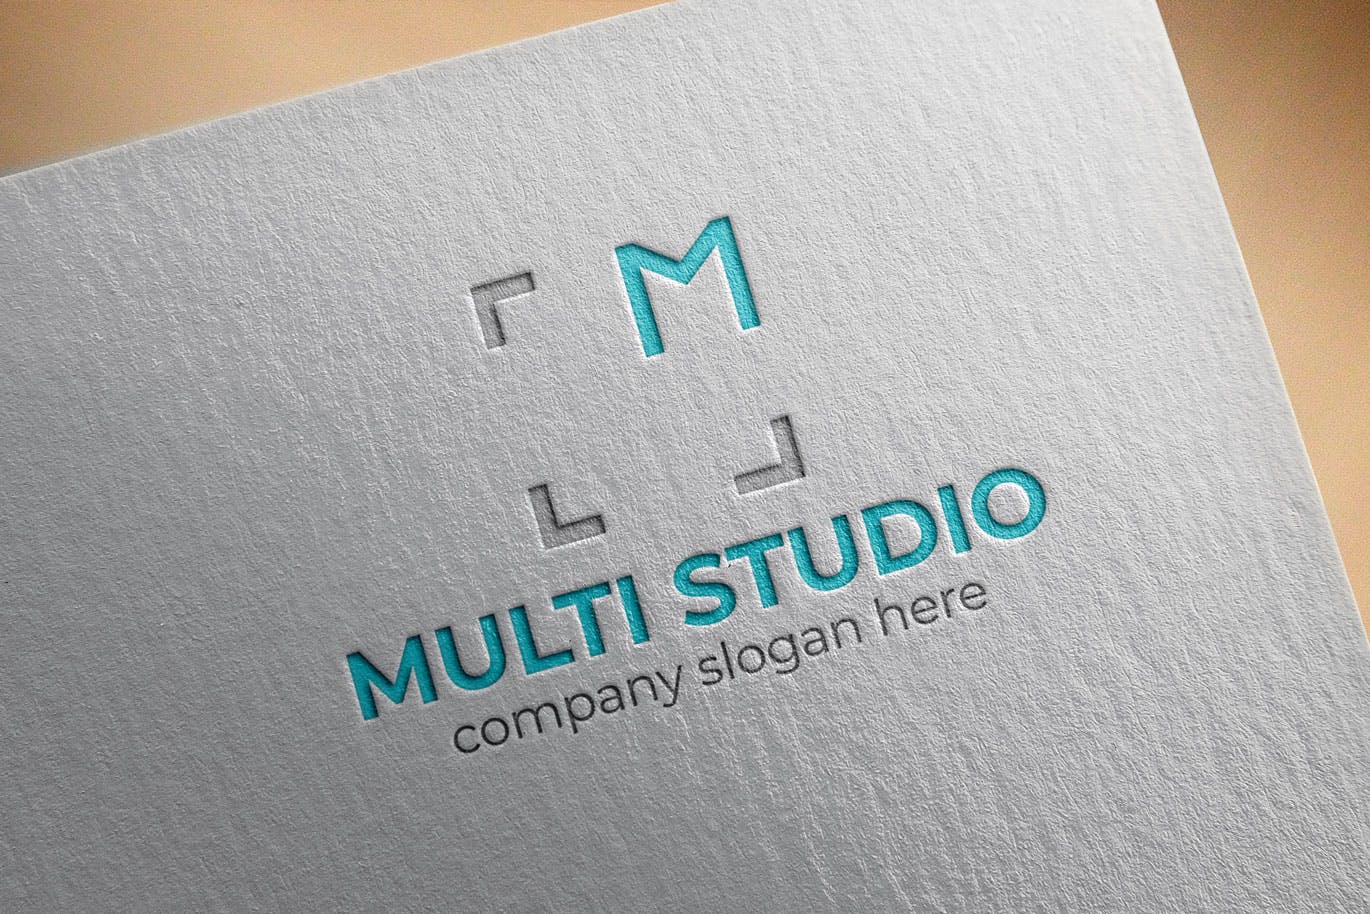 字母M创意图形企业品牌Logo设计素材库精选模板 Letter Based Business Logo Template插图(2)